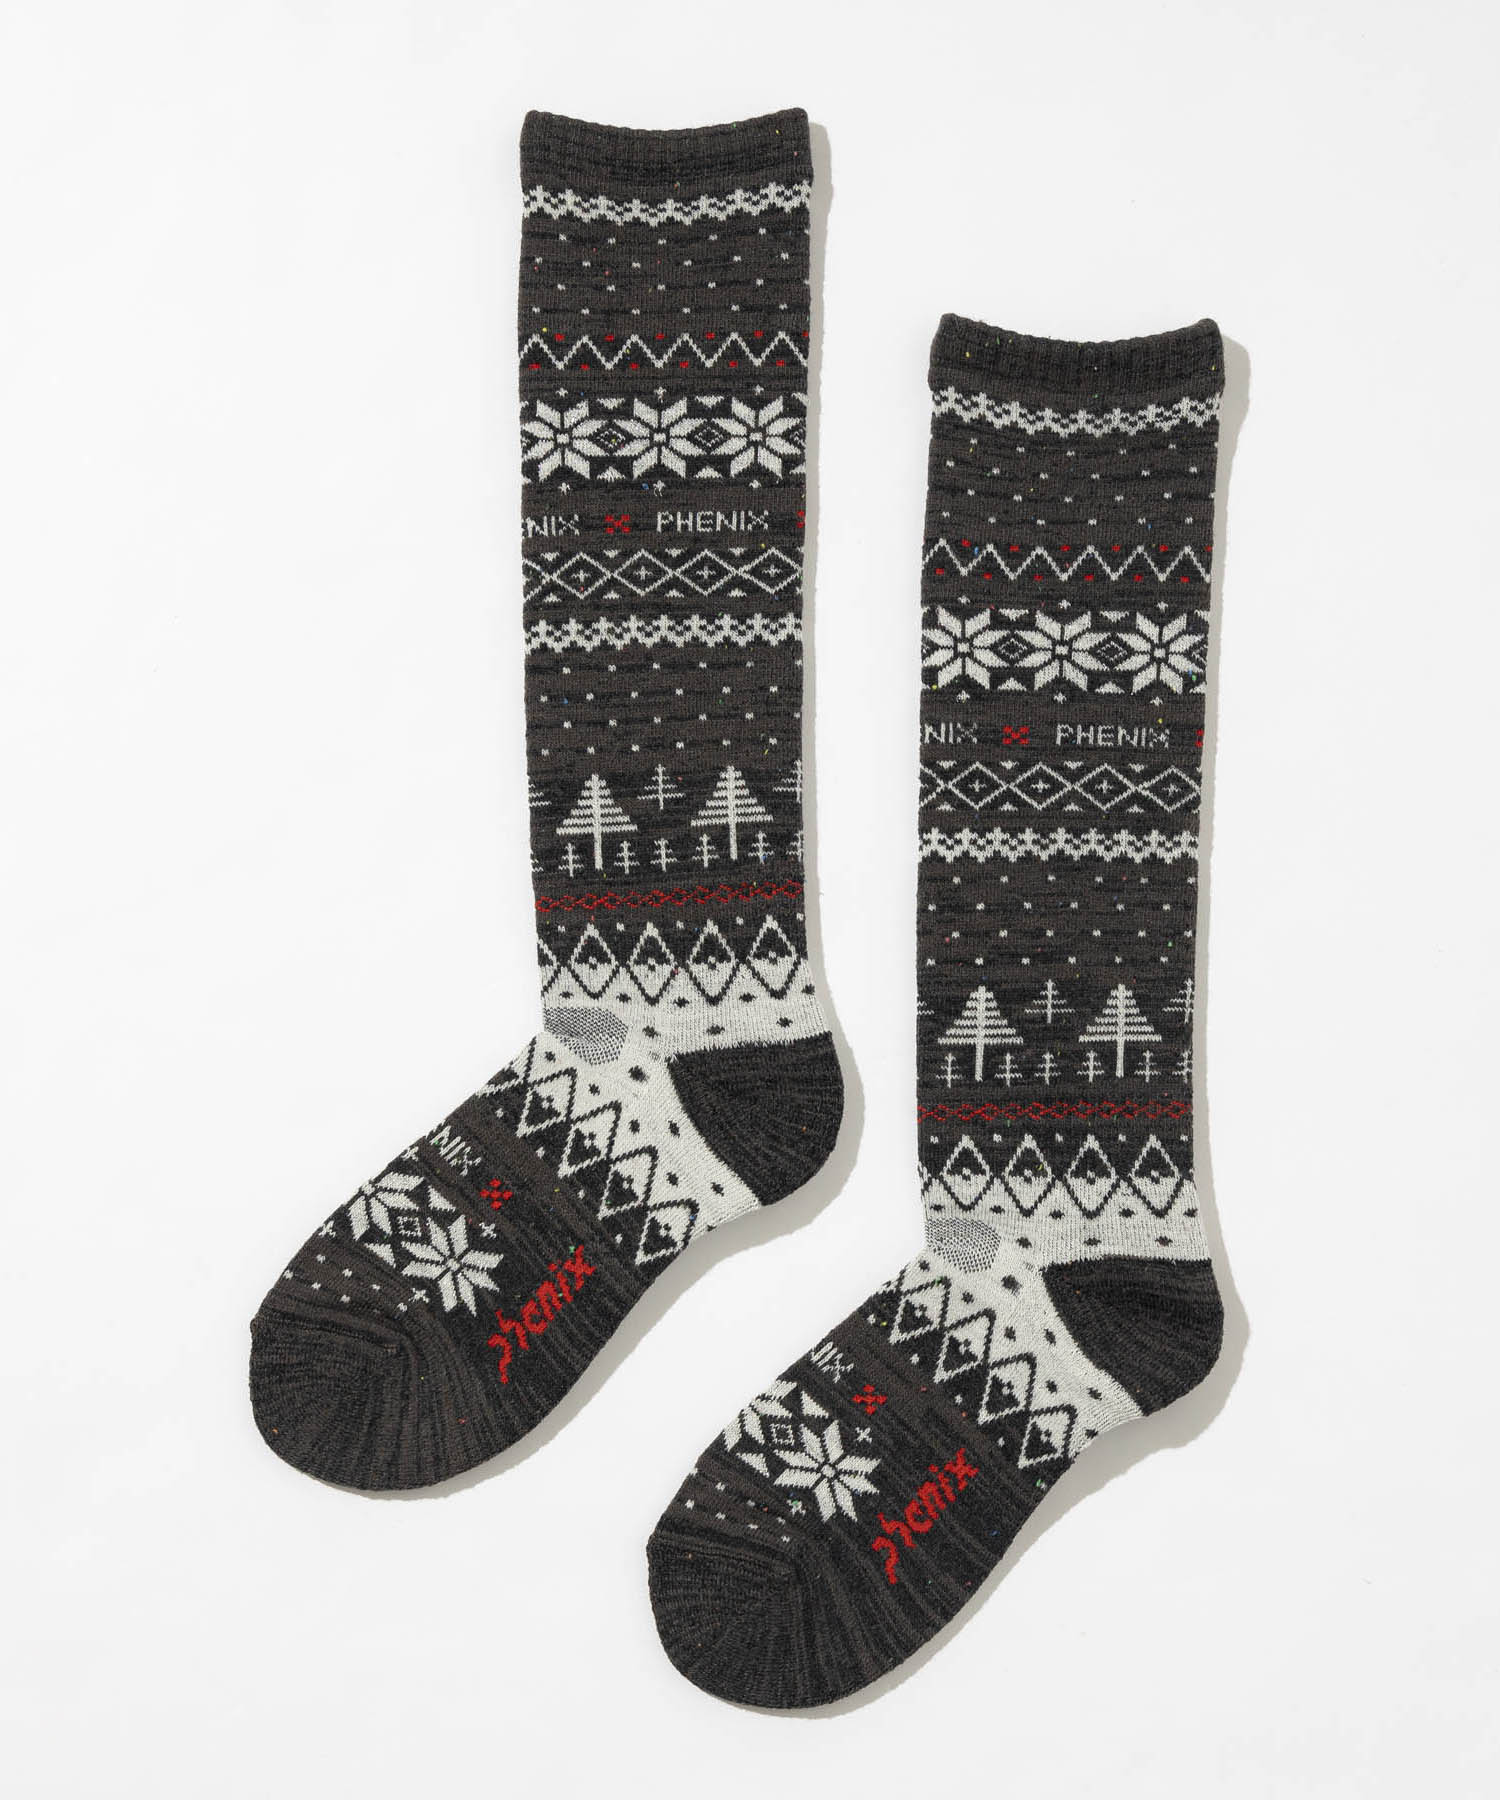 Phenix フェニックス Snow Patterned Socks スノウパターンドソックス 時間指定不可 話題の人気 カッパ phenix アンド WOMENS Kappa